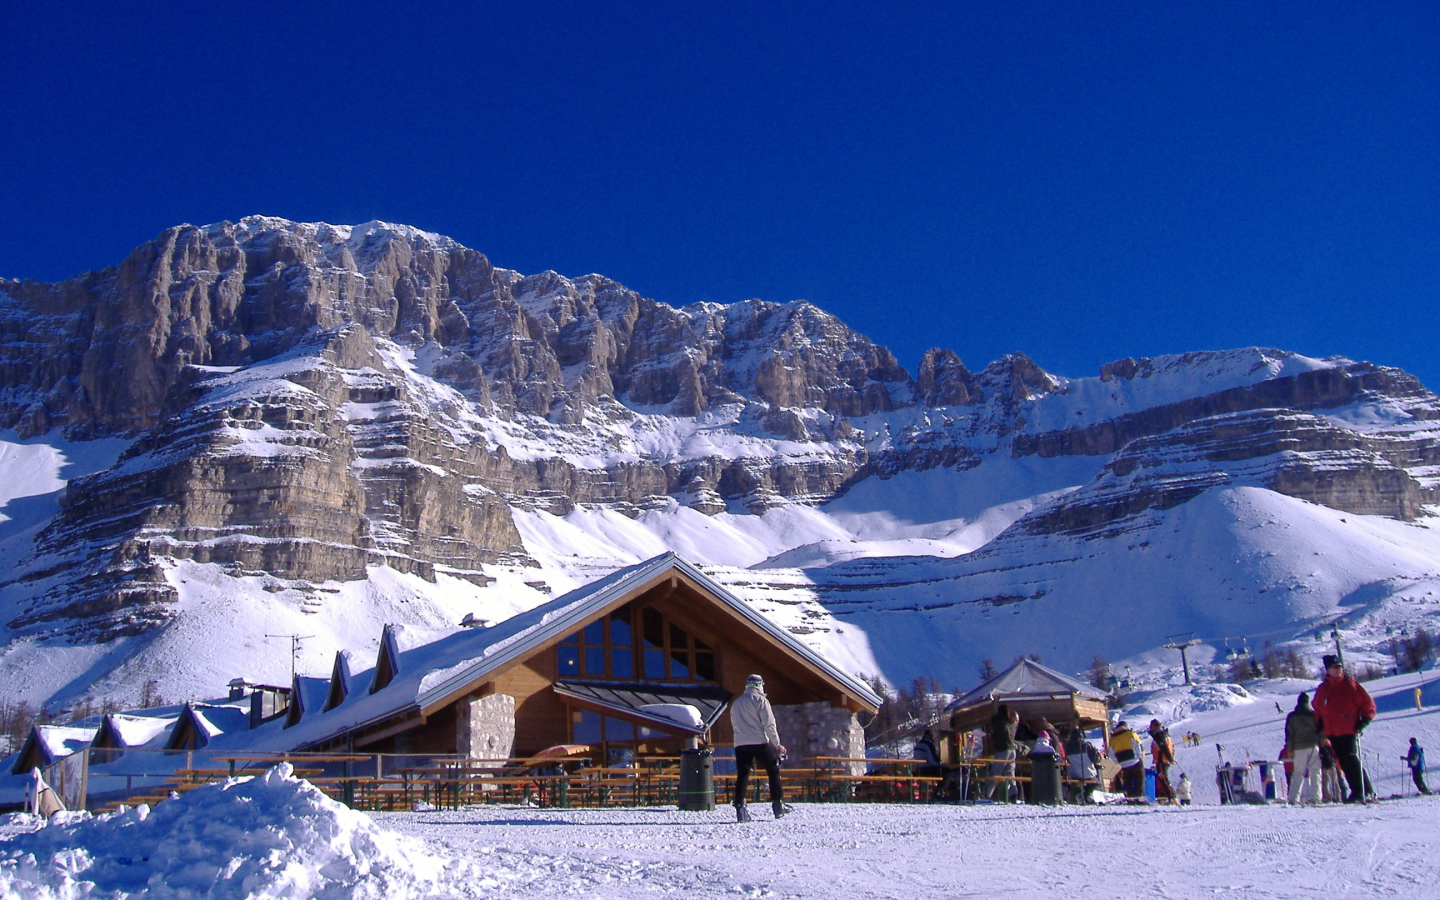 Ski resort at Madonna di Campiglio, Italy